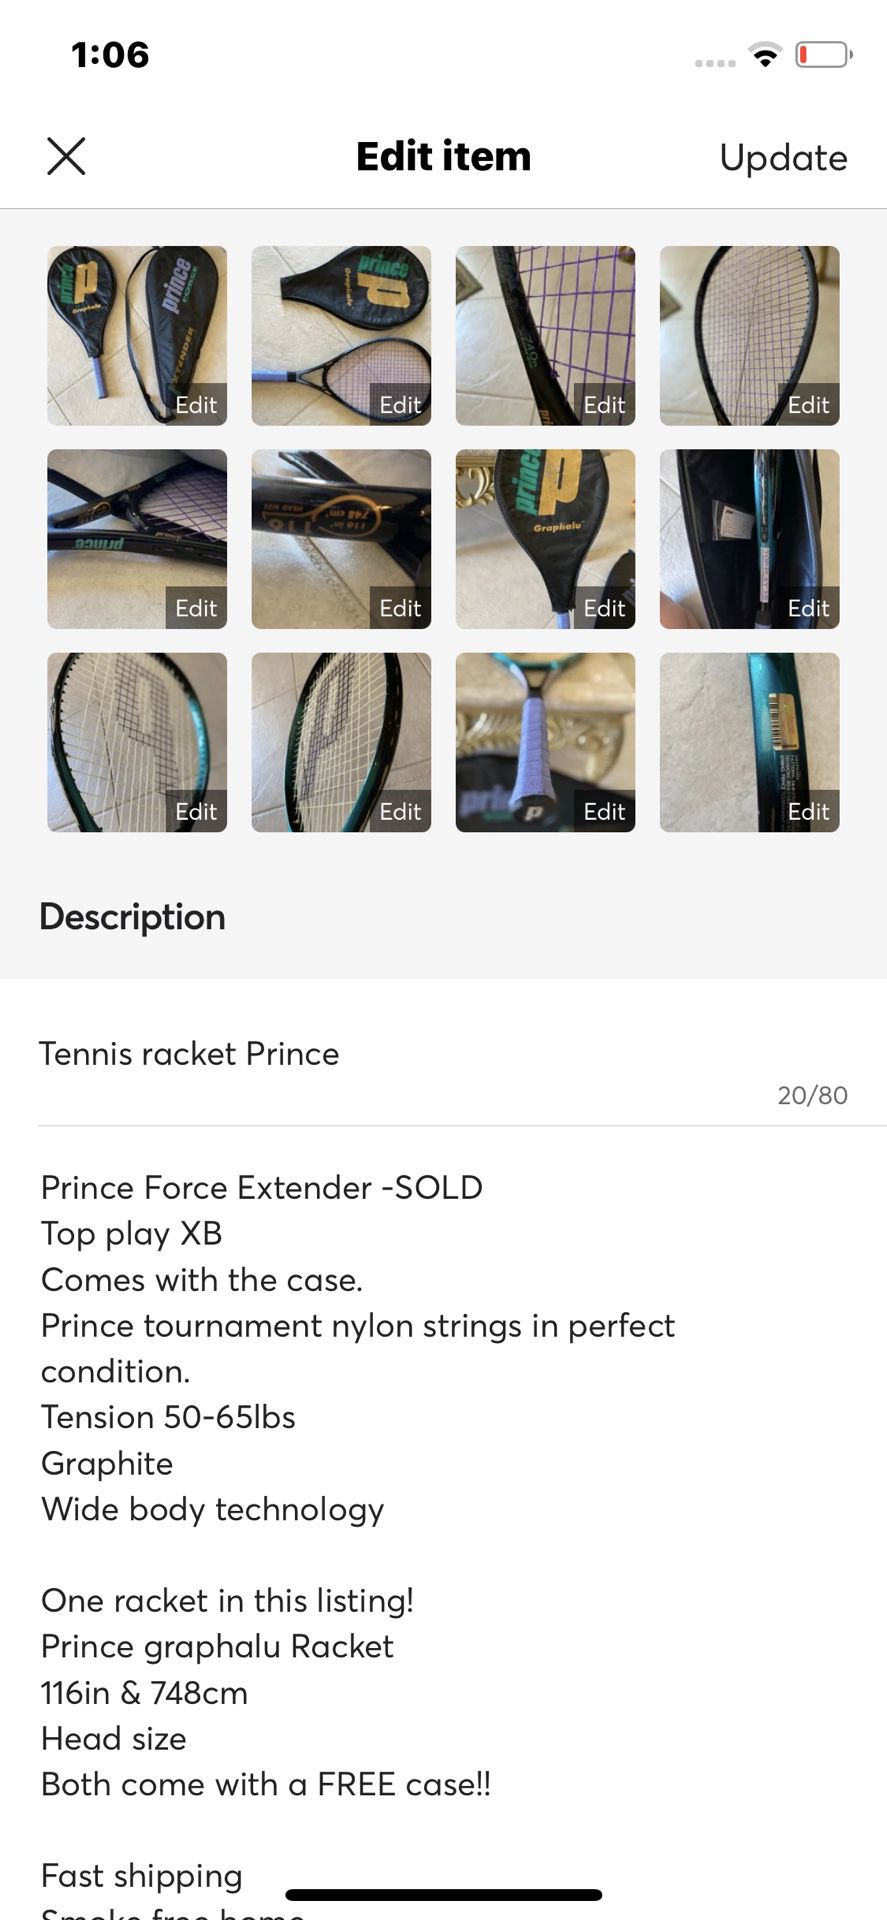 Tennis racket -Prince